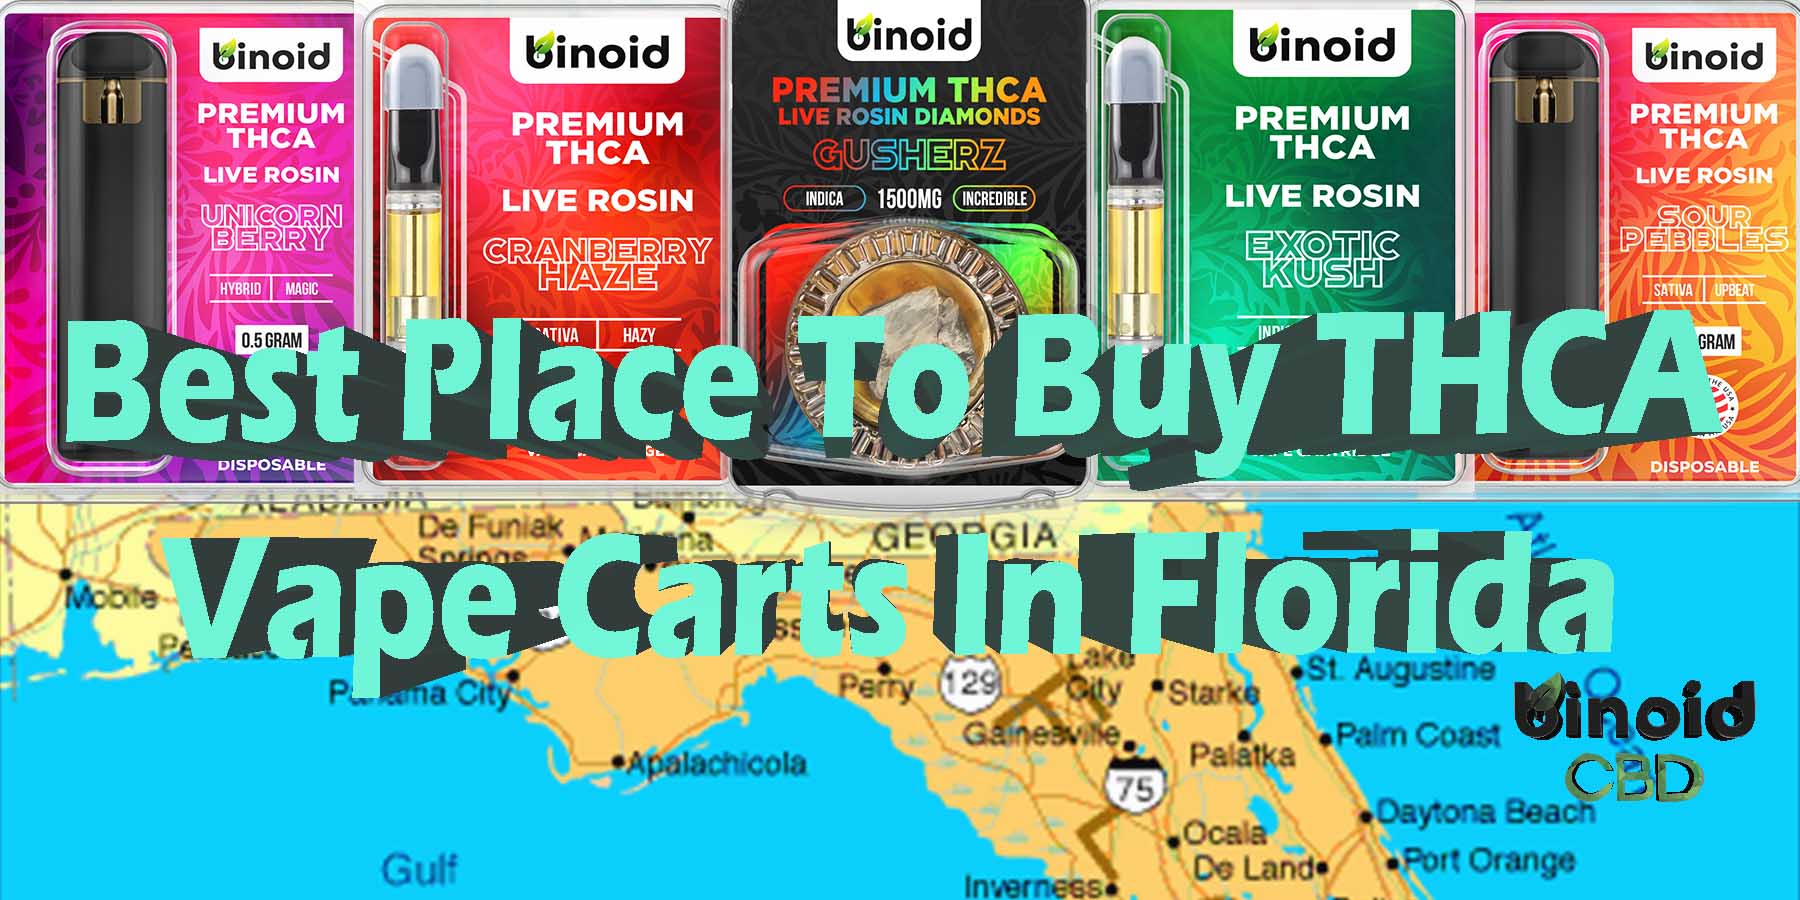 Buy THCA Vape Cartridges Carts Florida Get Online Near Me For Sale Best Brand Strongest Real Legal Store Shop Reddit